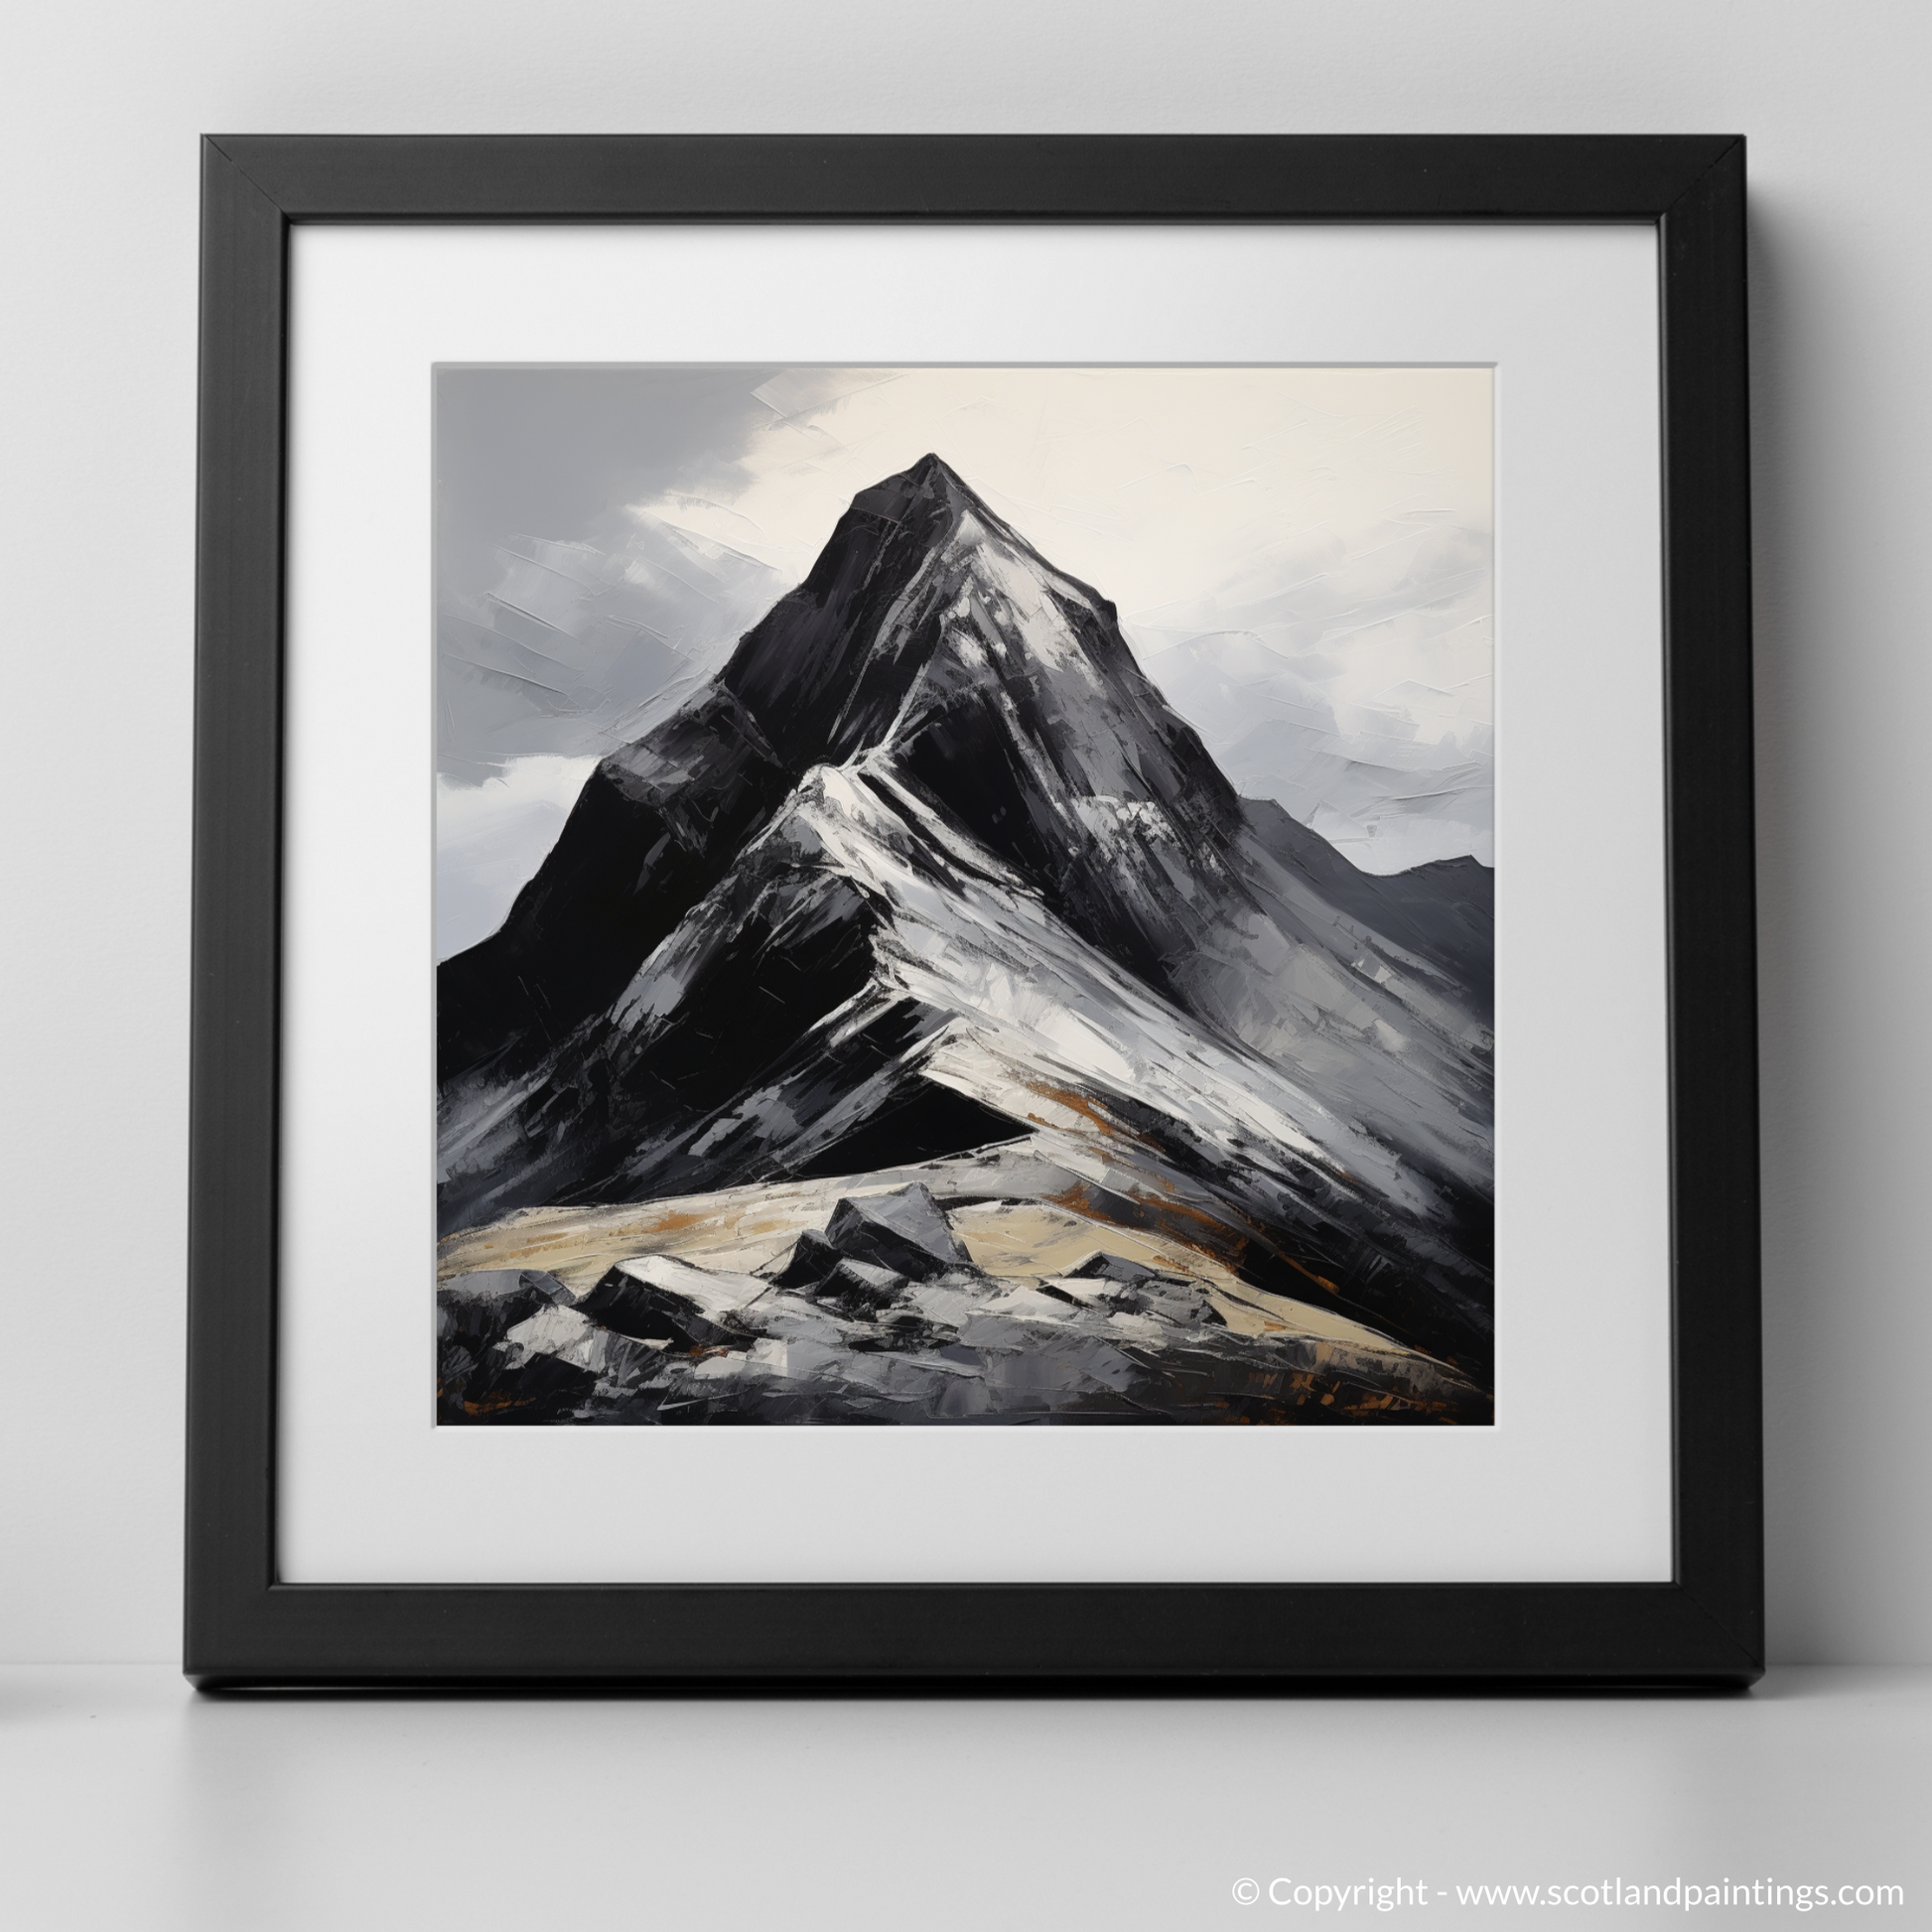 Art Print of Sgurr Dearg, Highlands with a black frame